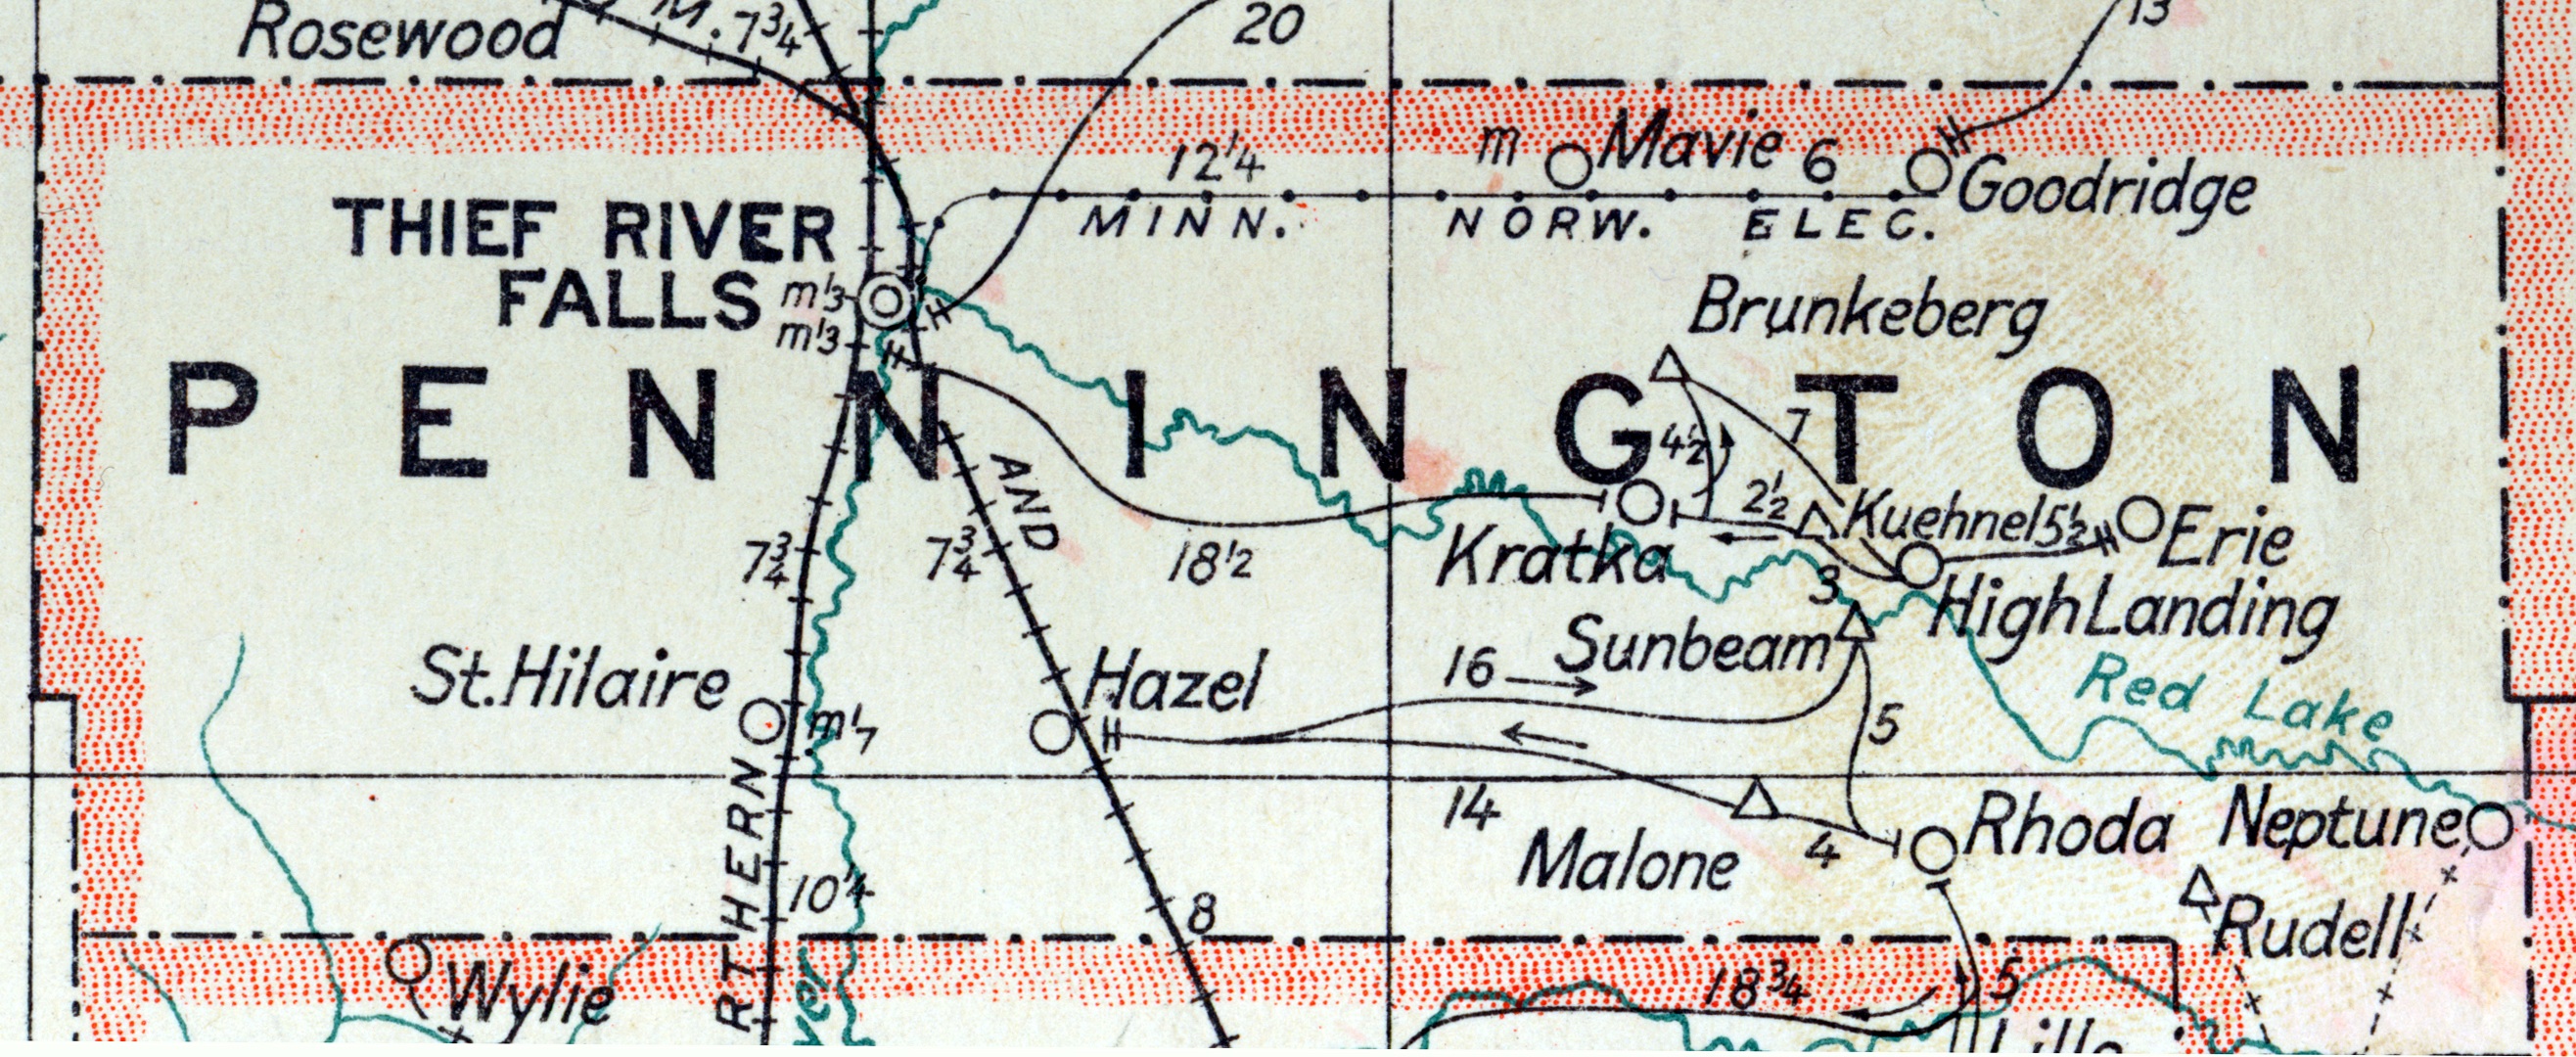 Pennington County Gis Mn File:pennington County (Mn) Postal And Railroad Map.jpg - Wikipedia